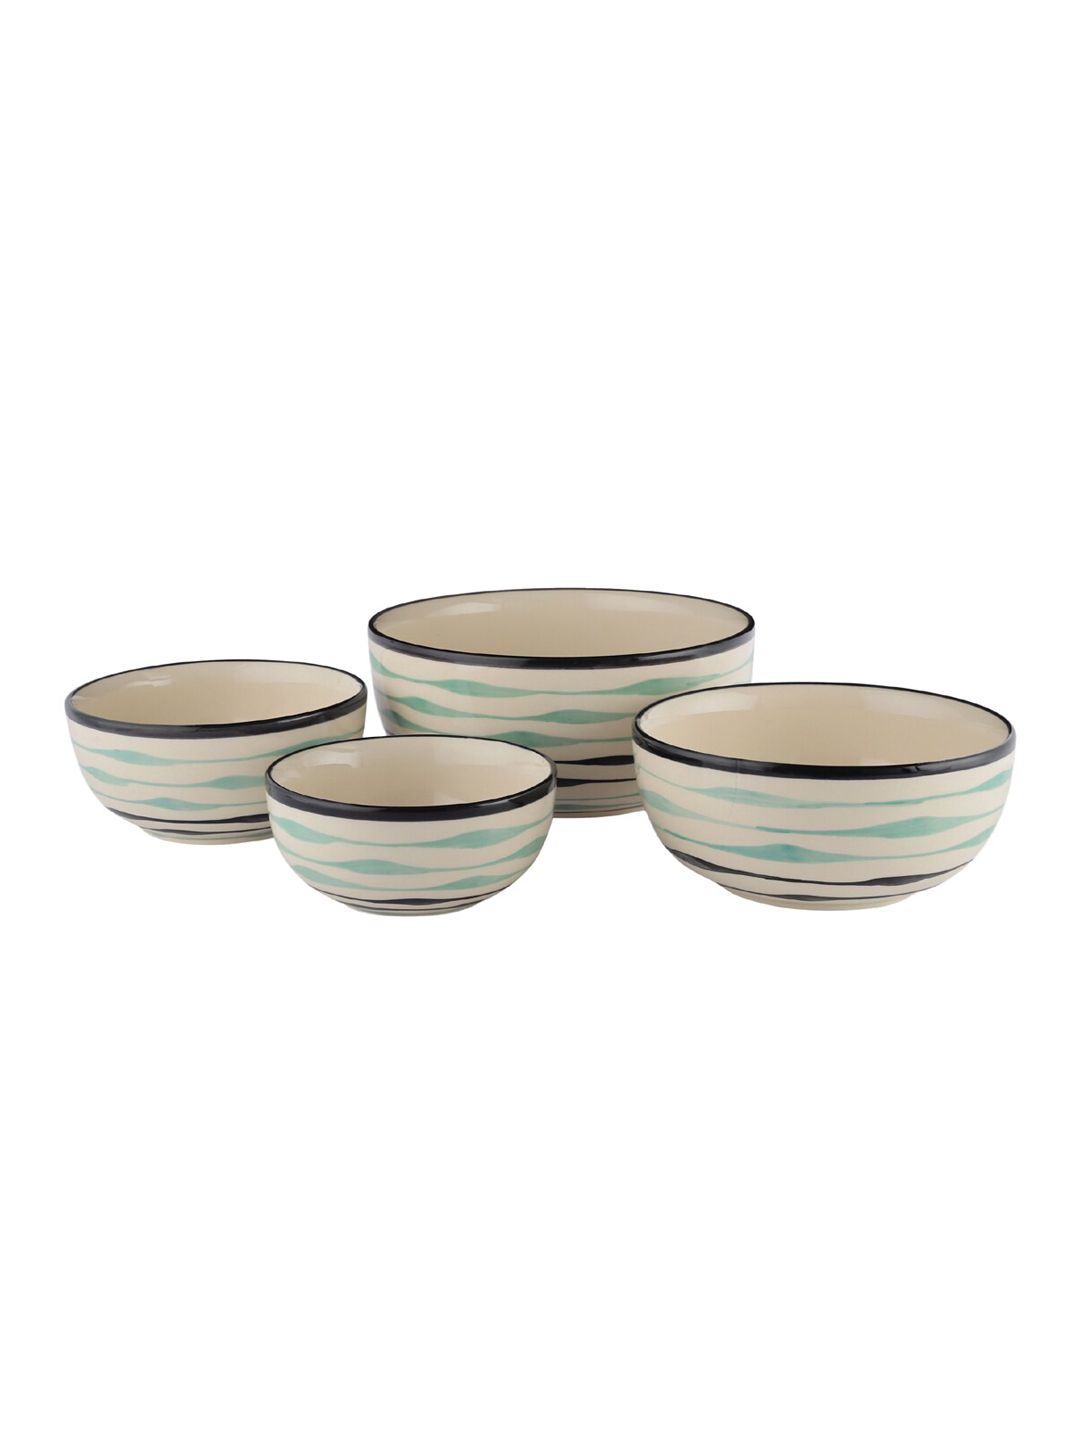 VarEesha Off-White & Green 4-Pieces Printed Ceramic Bowls Set Price in India